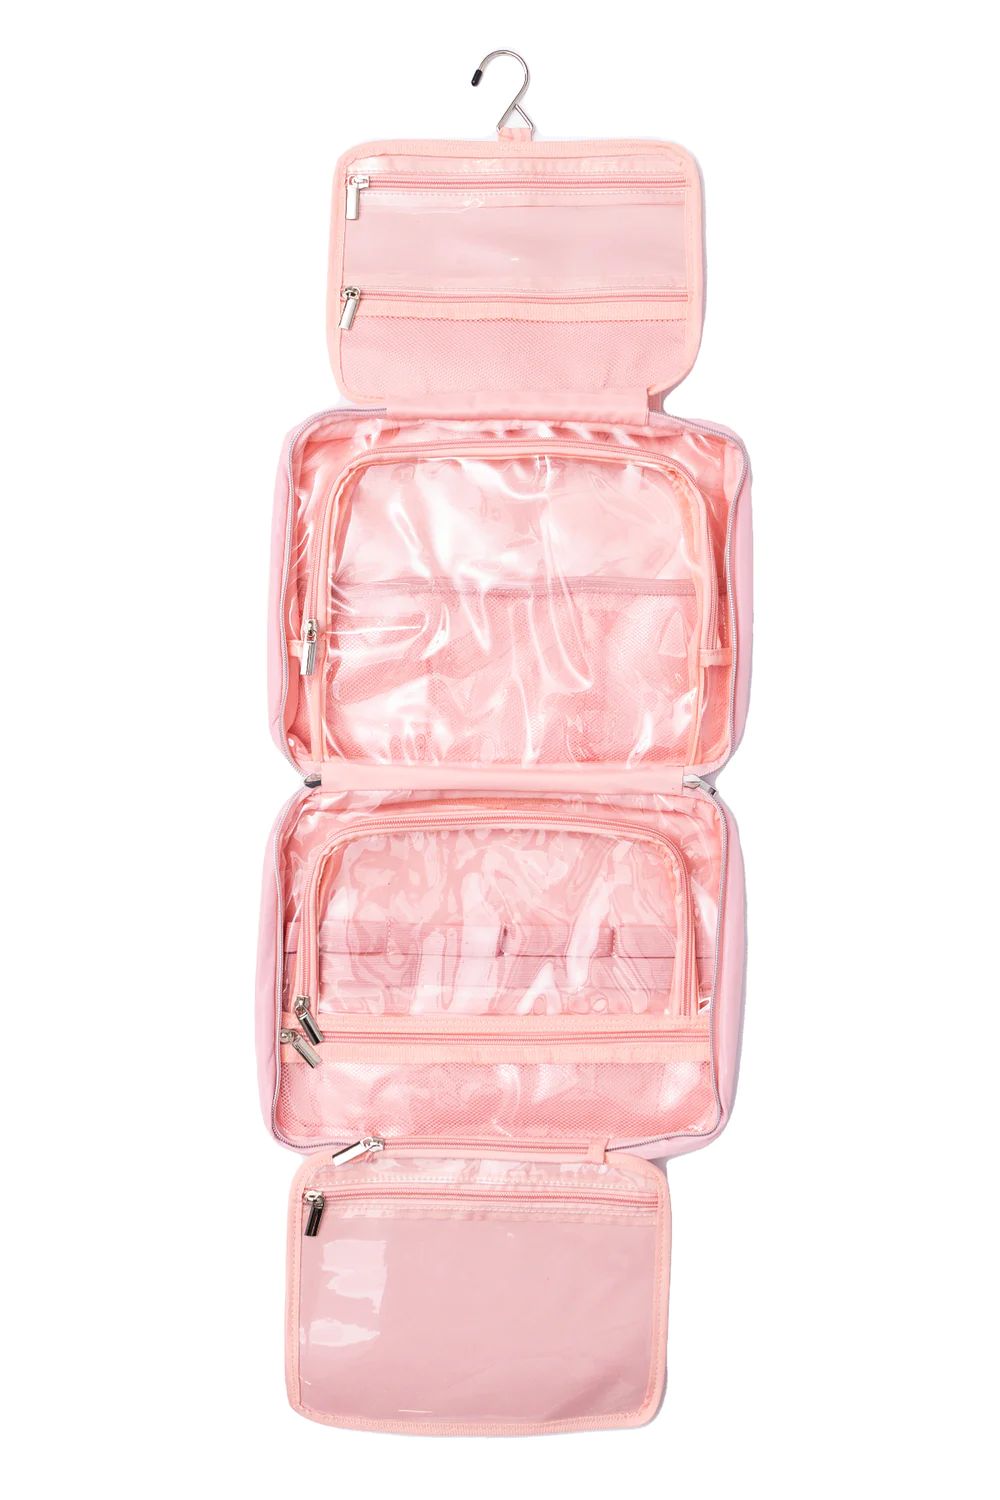 Destined For Forever Pink Hanging Makeup Bag FINAL SALE | Pink Lily